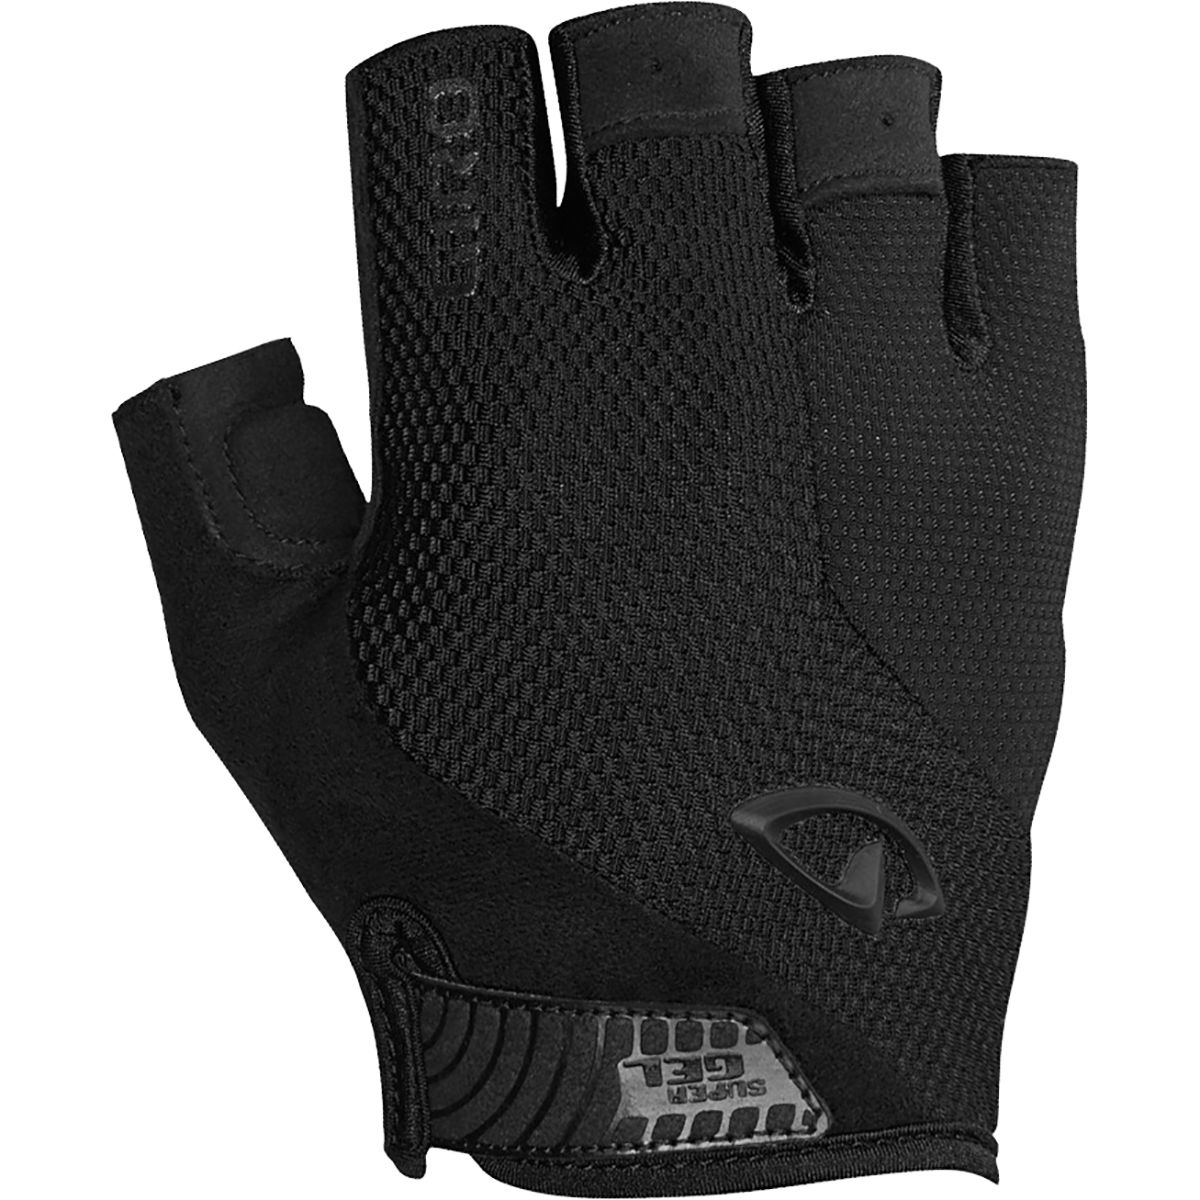 Giro Strate Dure Supergel Glove - Men's Black, S